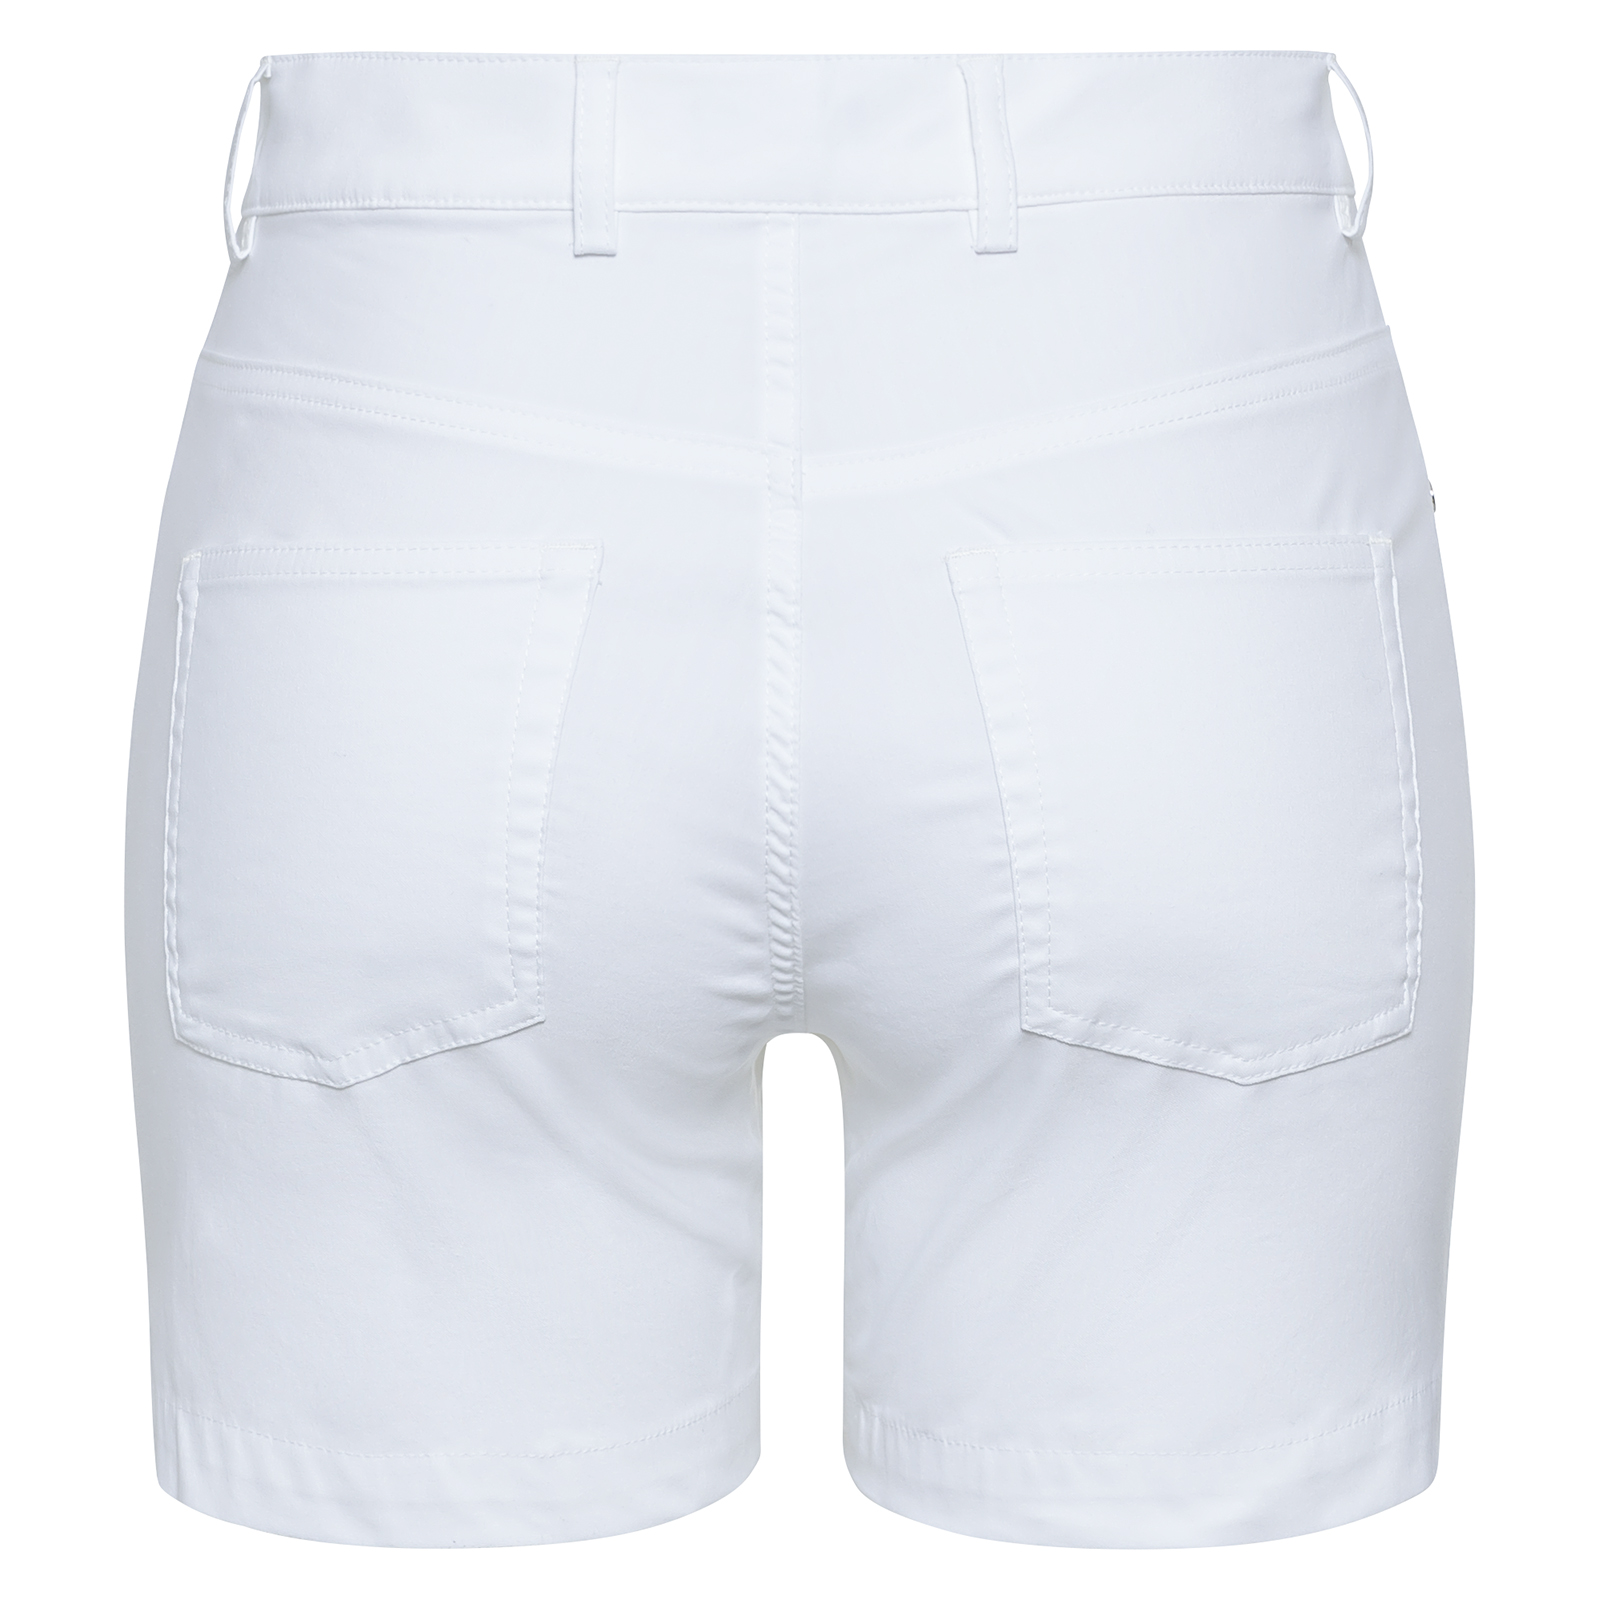 Ladies' 5-pocket style golf shorts